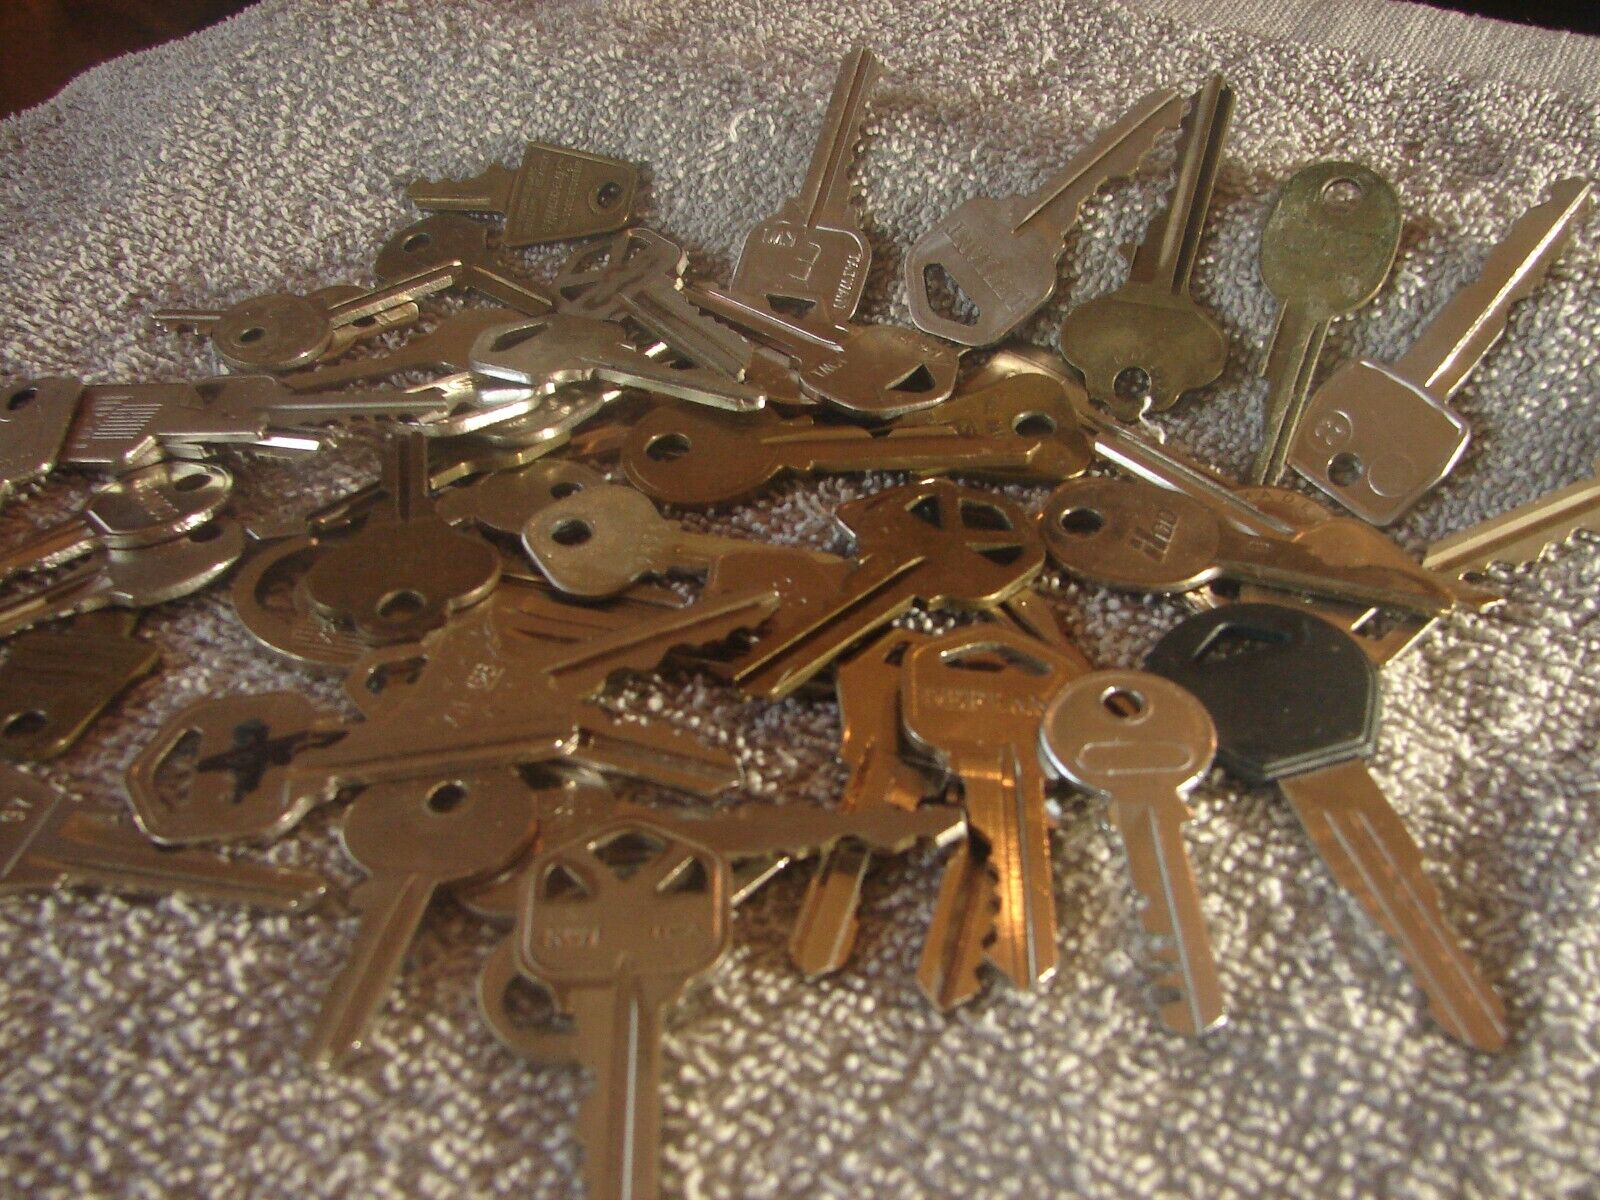 Almost 1 Pound (55) Asst. Keys, Car, House, Locks, Etc